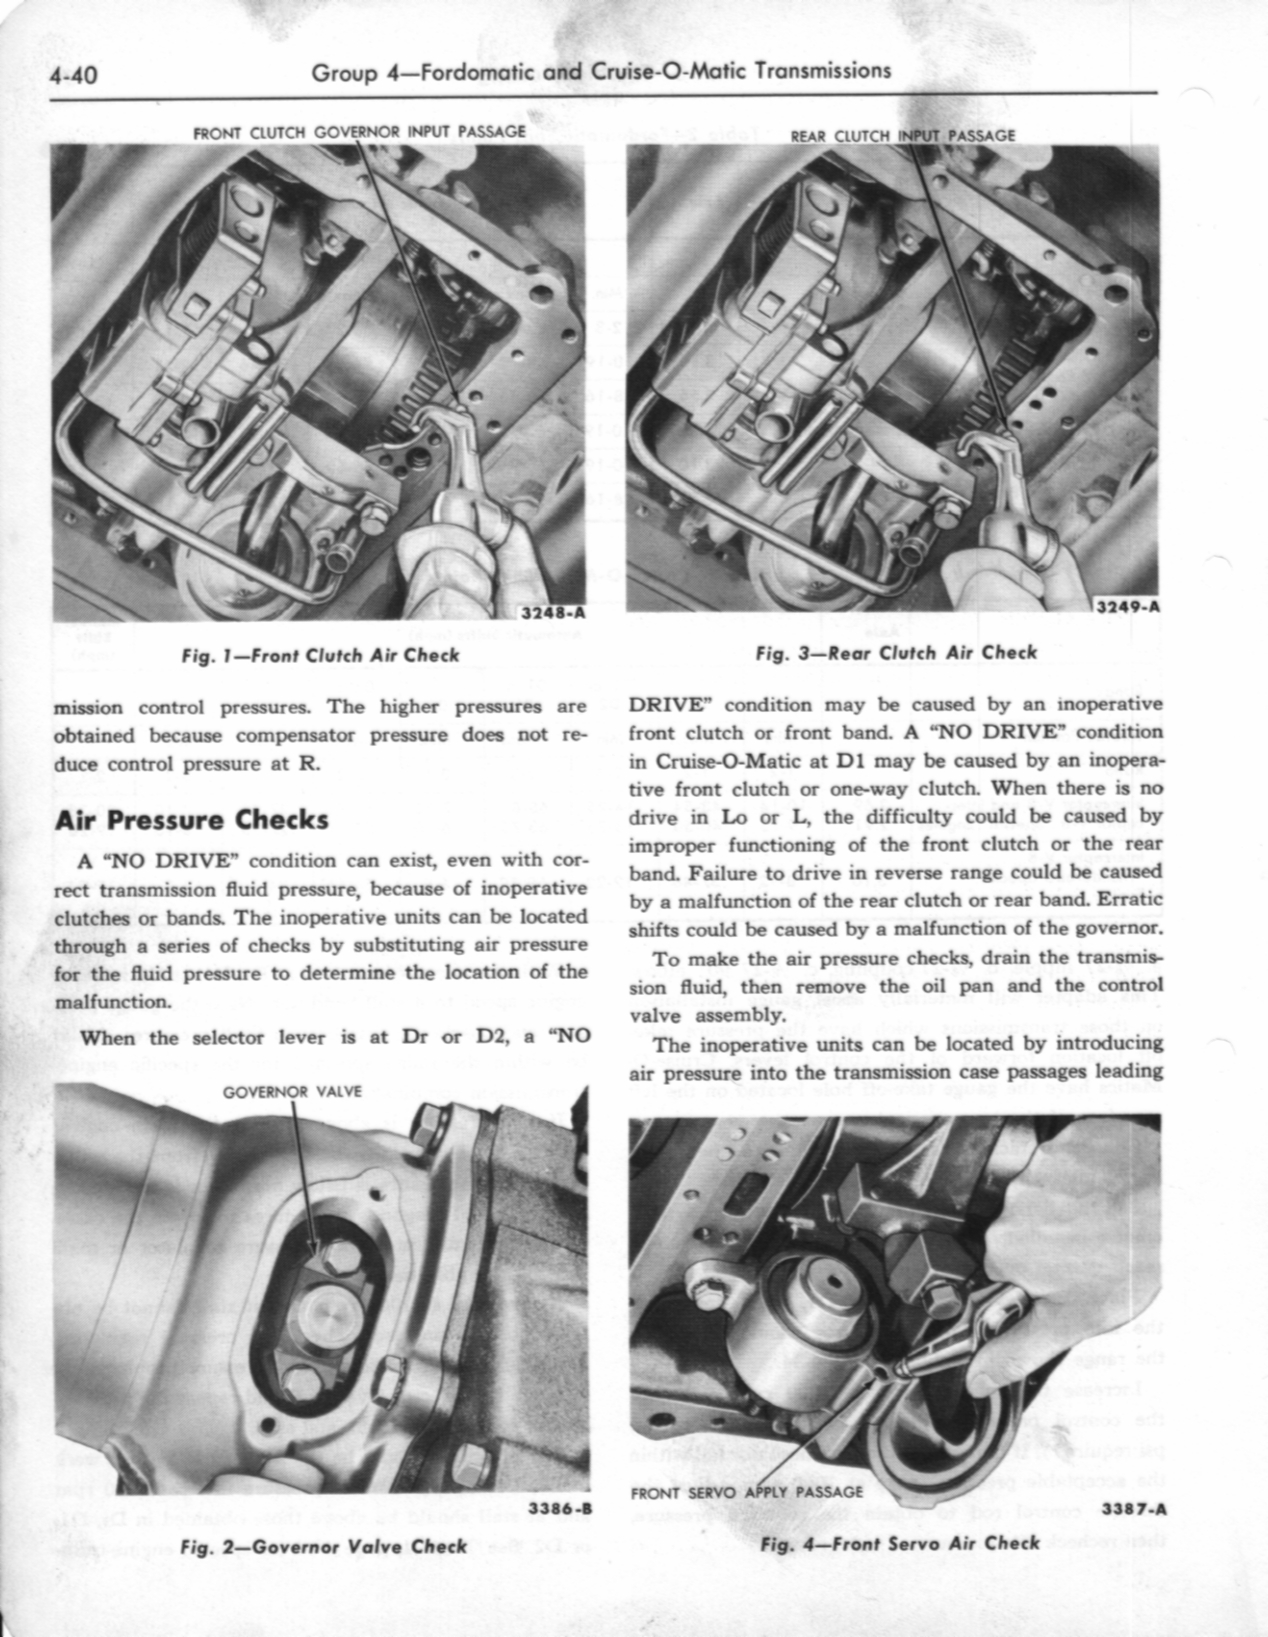 Ford cruise-o-matic transmission #9